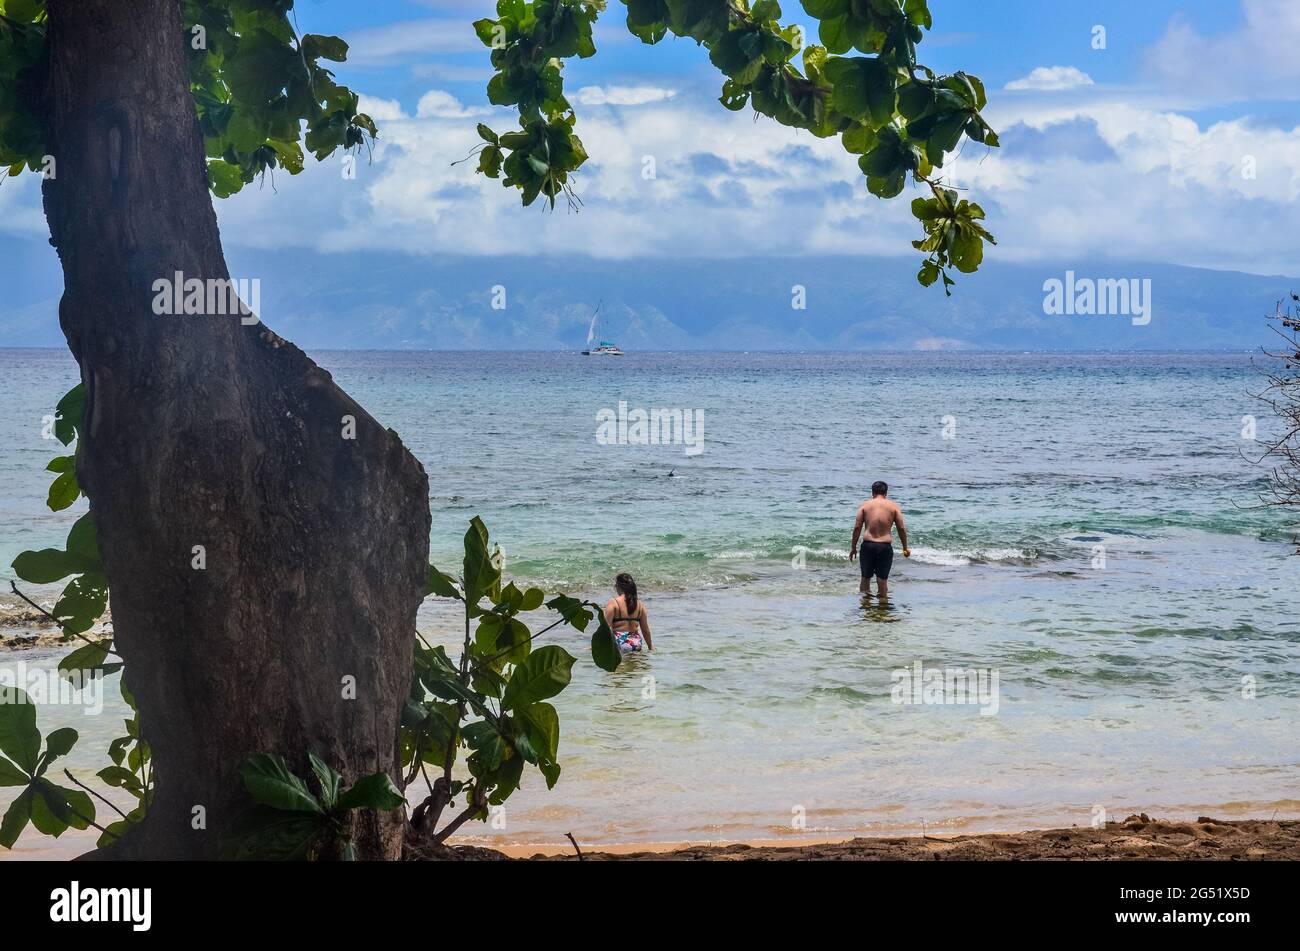 Honokowai Beach Park. Visitors swim and snorkel on public beach. Maui, Hawaii, USA. June 10, 2021. Stock Photo